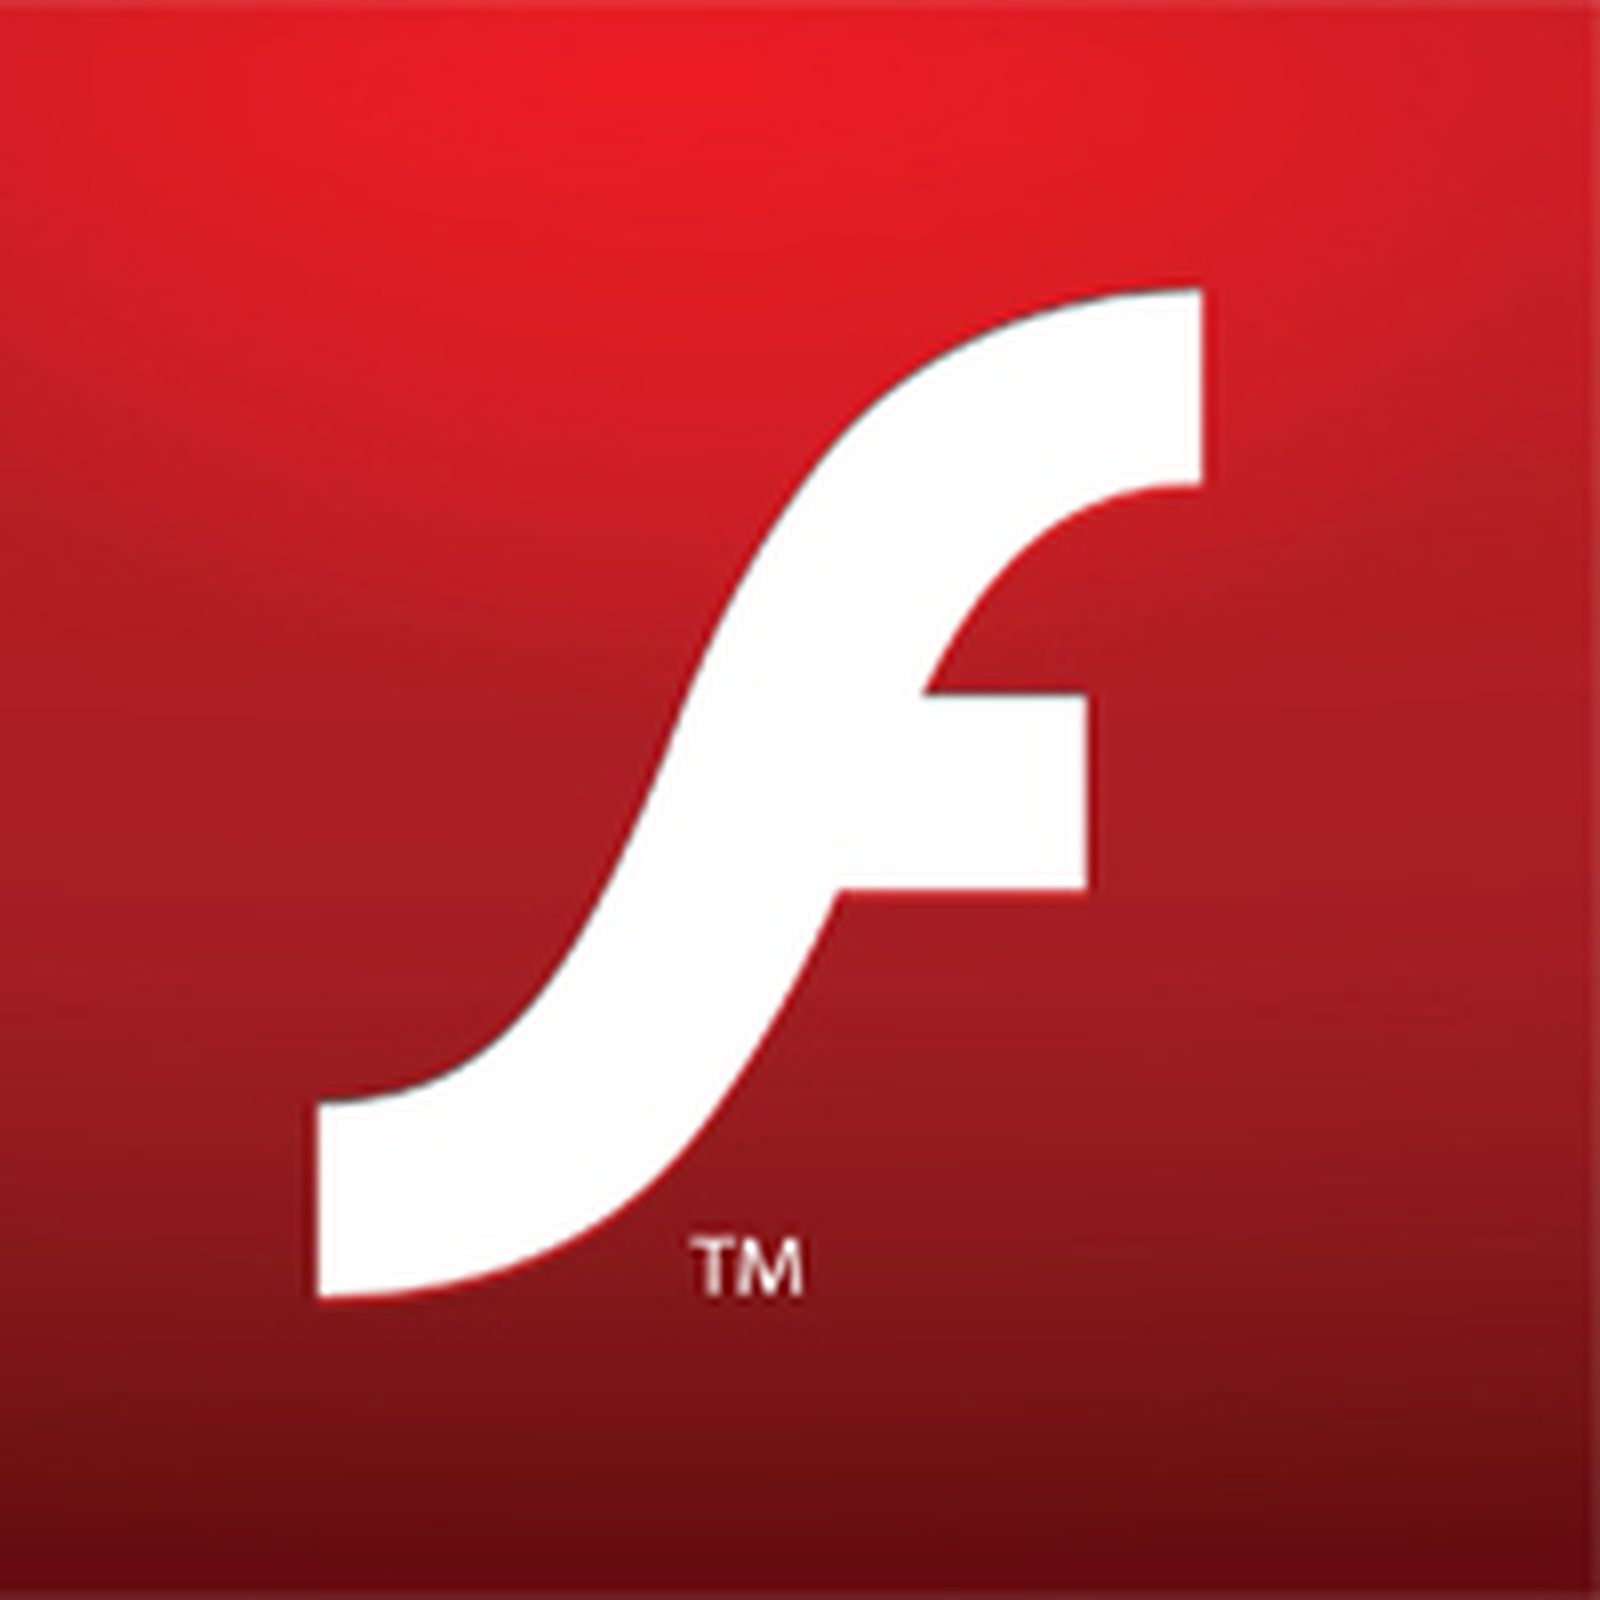 how to upgrade adobe flash on mac